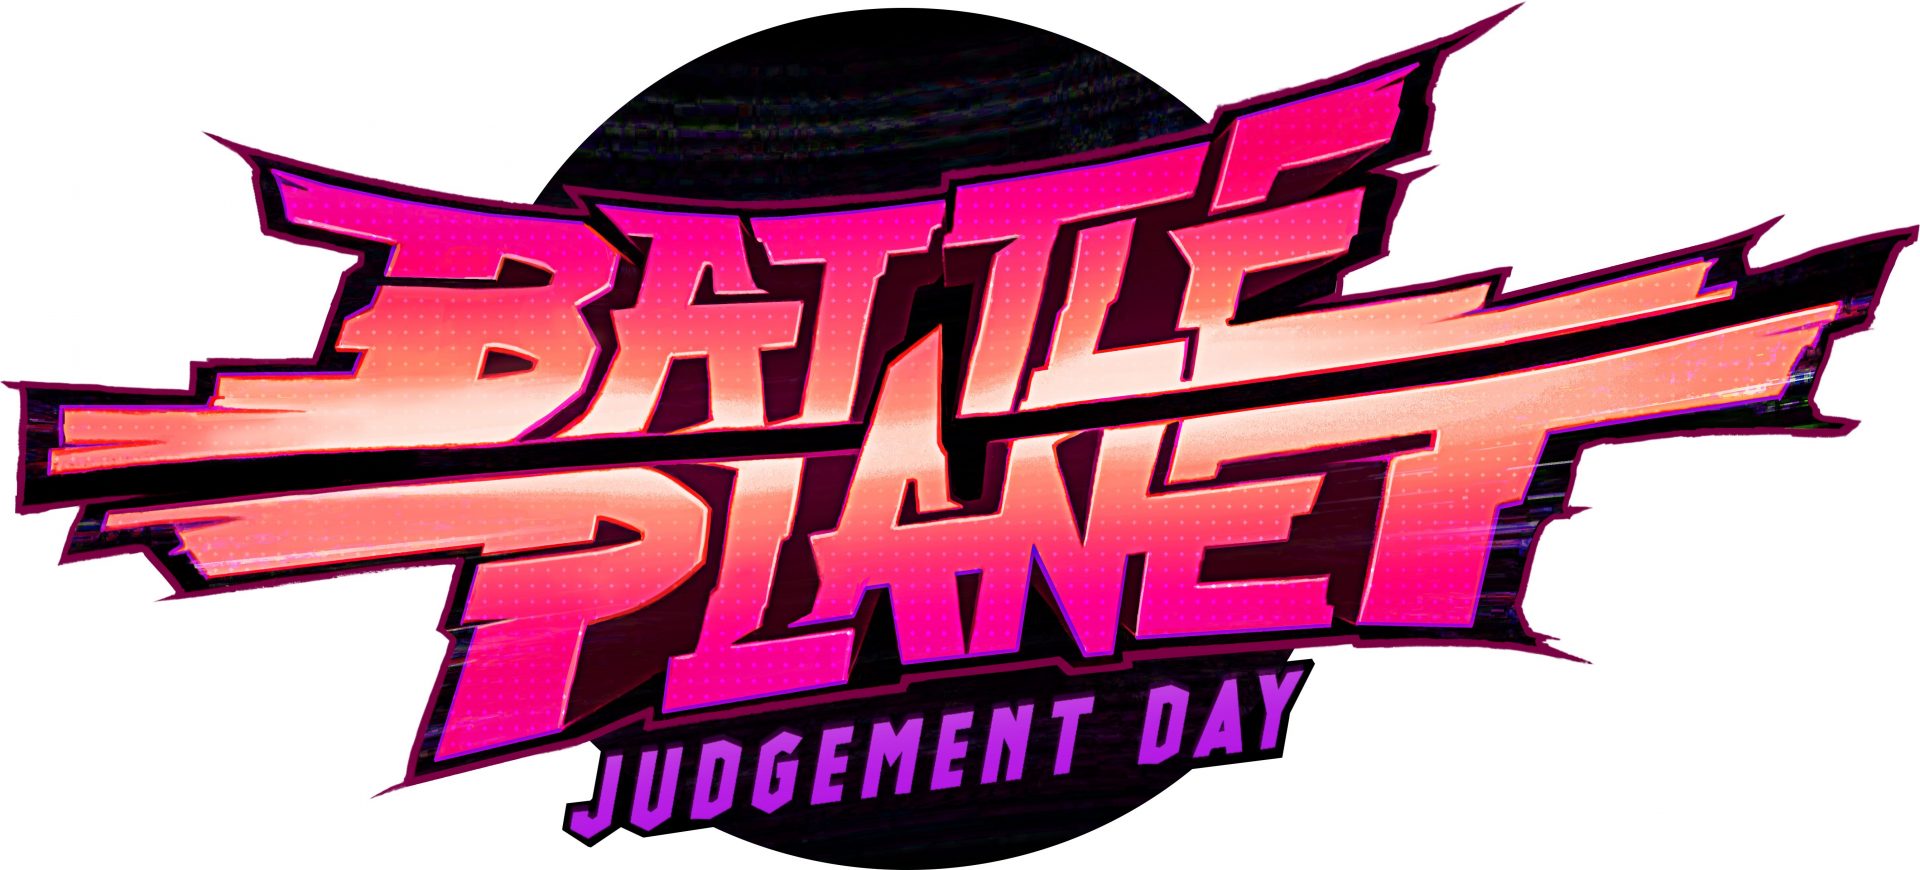 Judgement day игра. Битва логотип. Battle Planet - Judgement Day. Баттл лого.